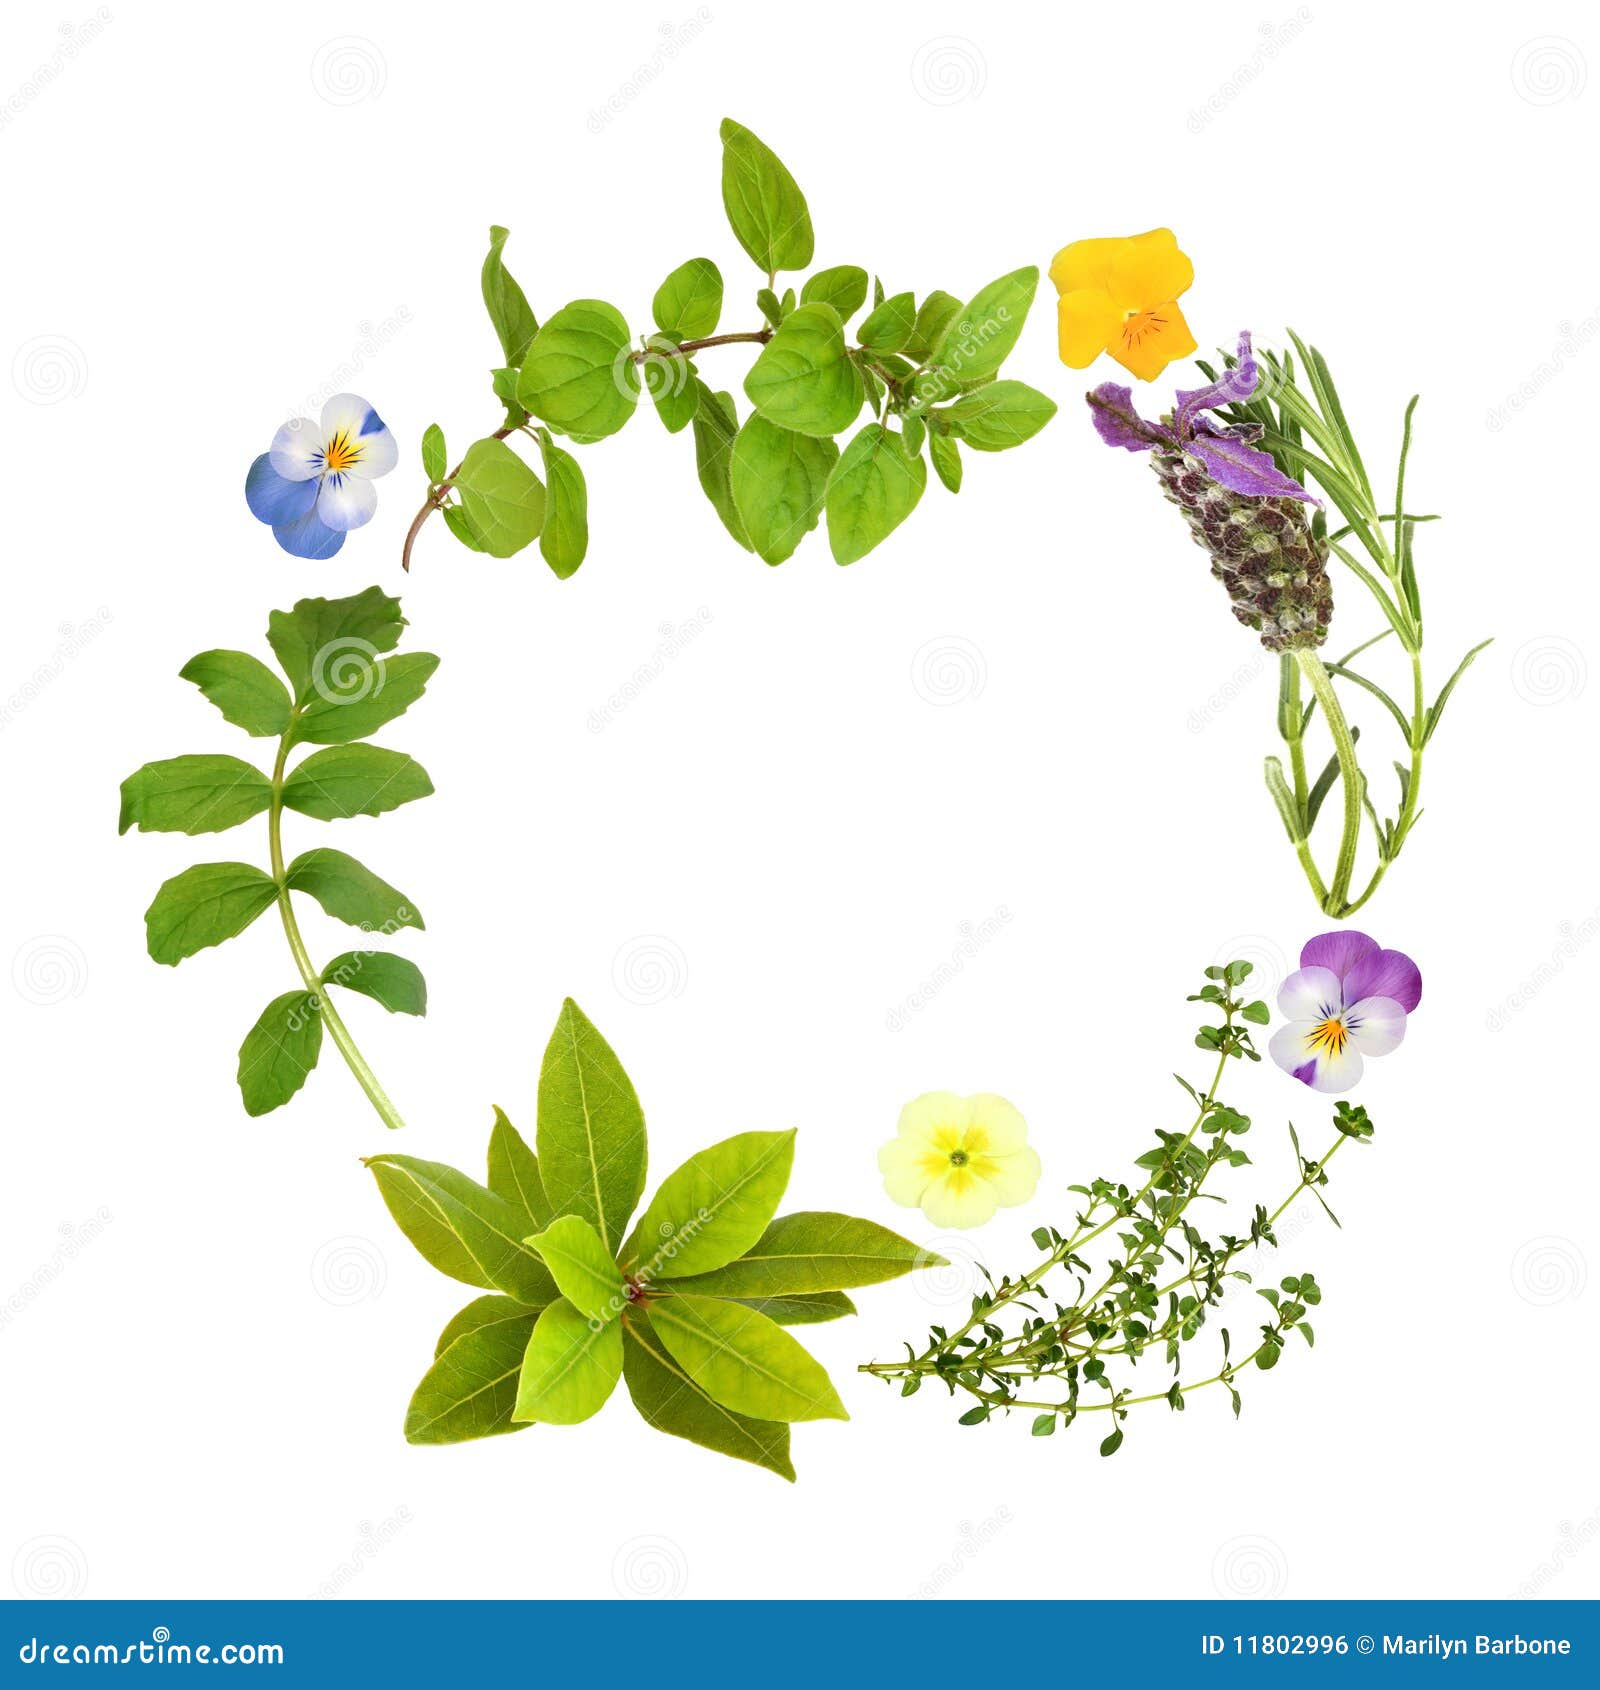 herb leaf and floral garland